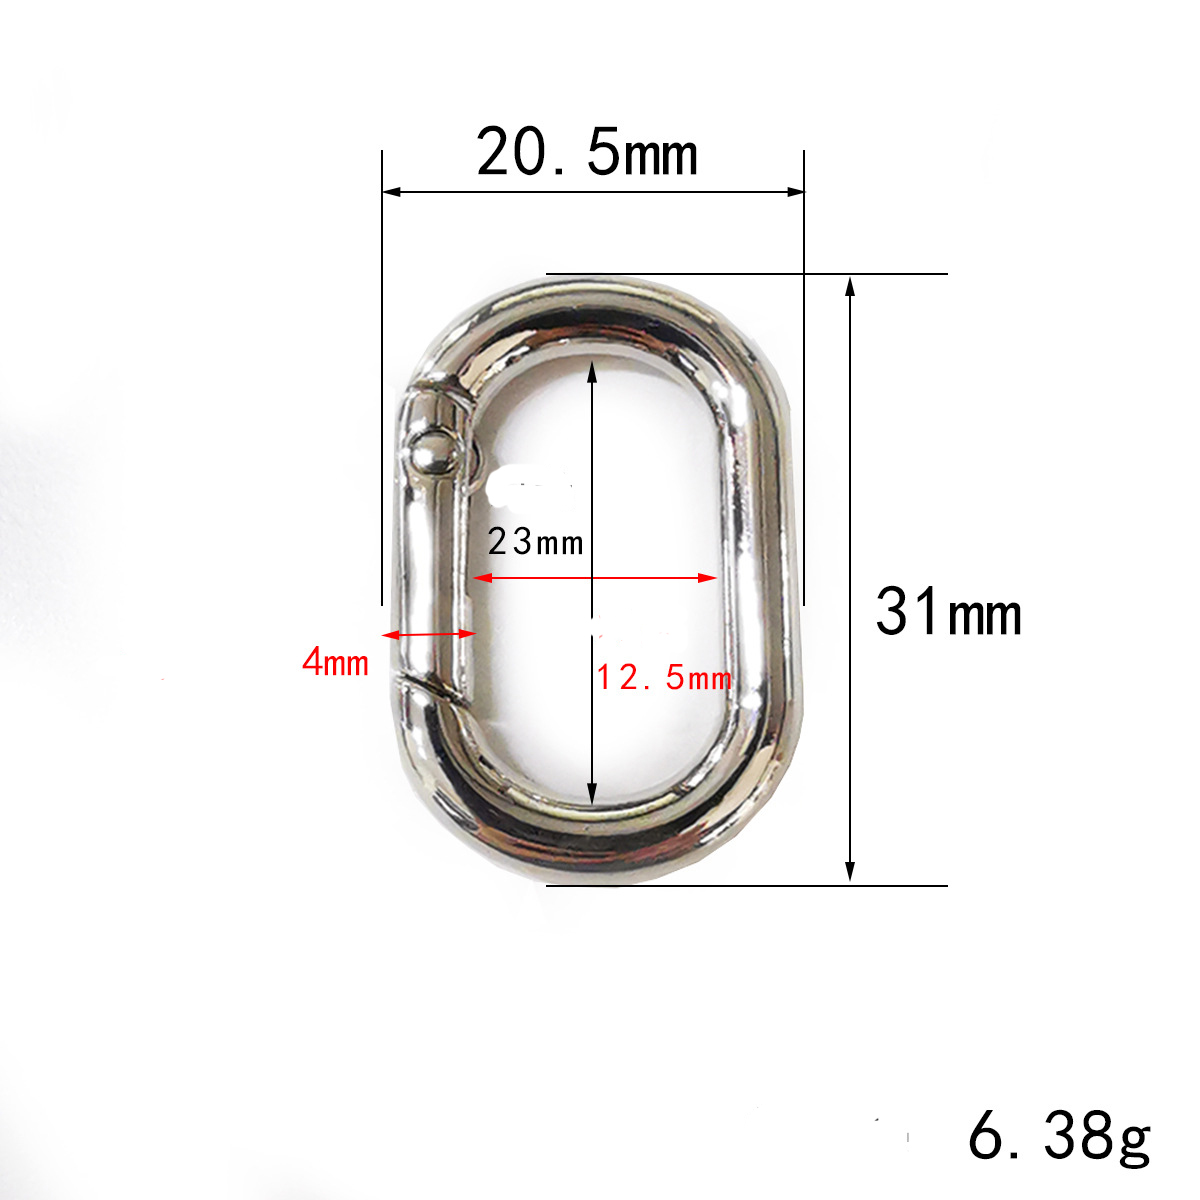 1:23mm inside diameter oval spring buckle